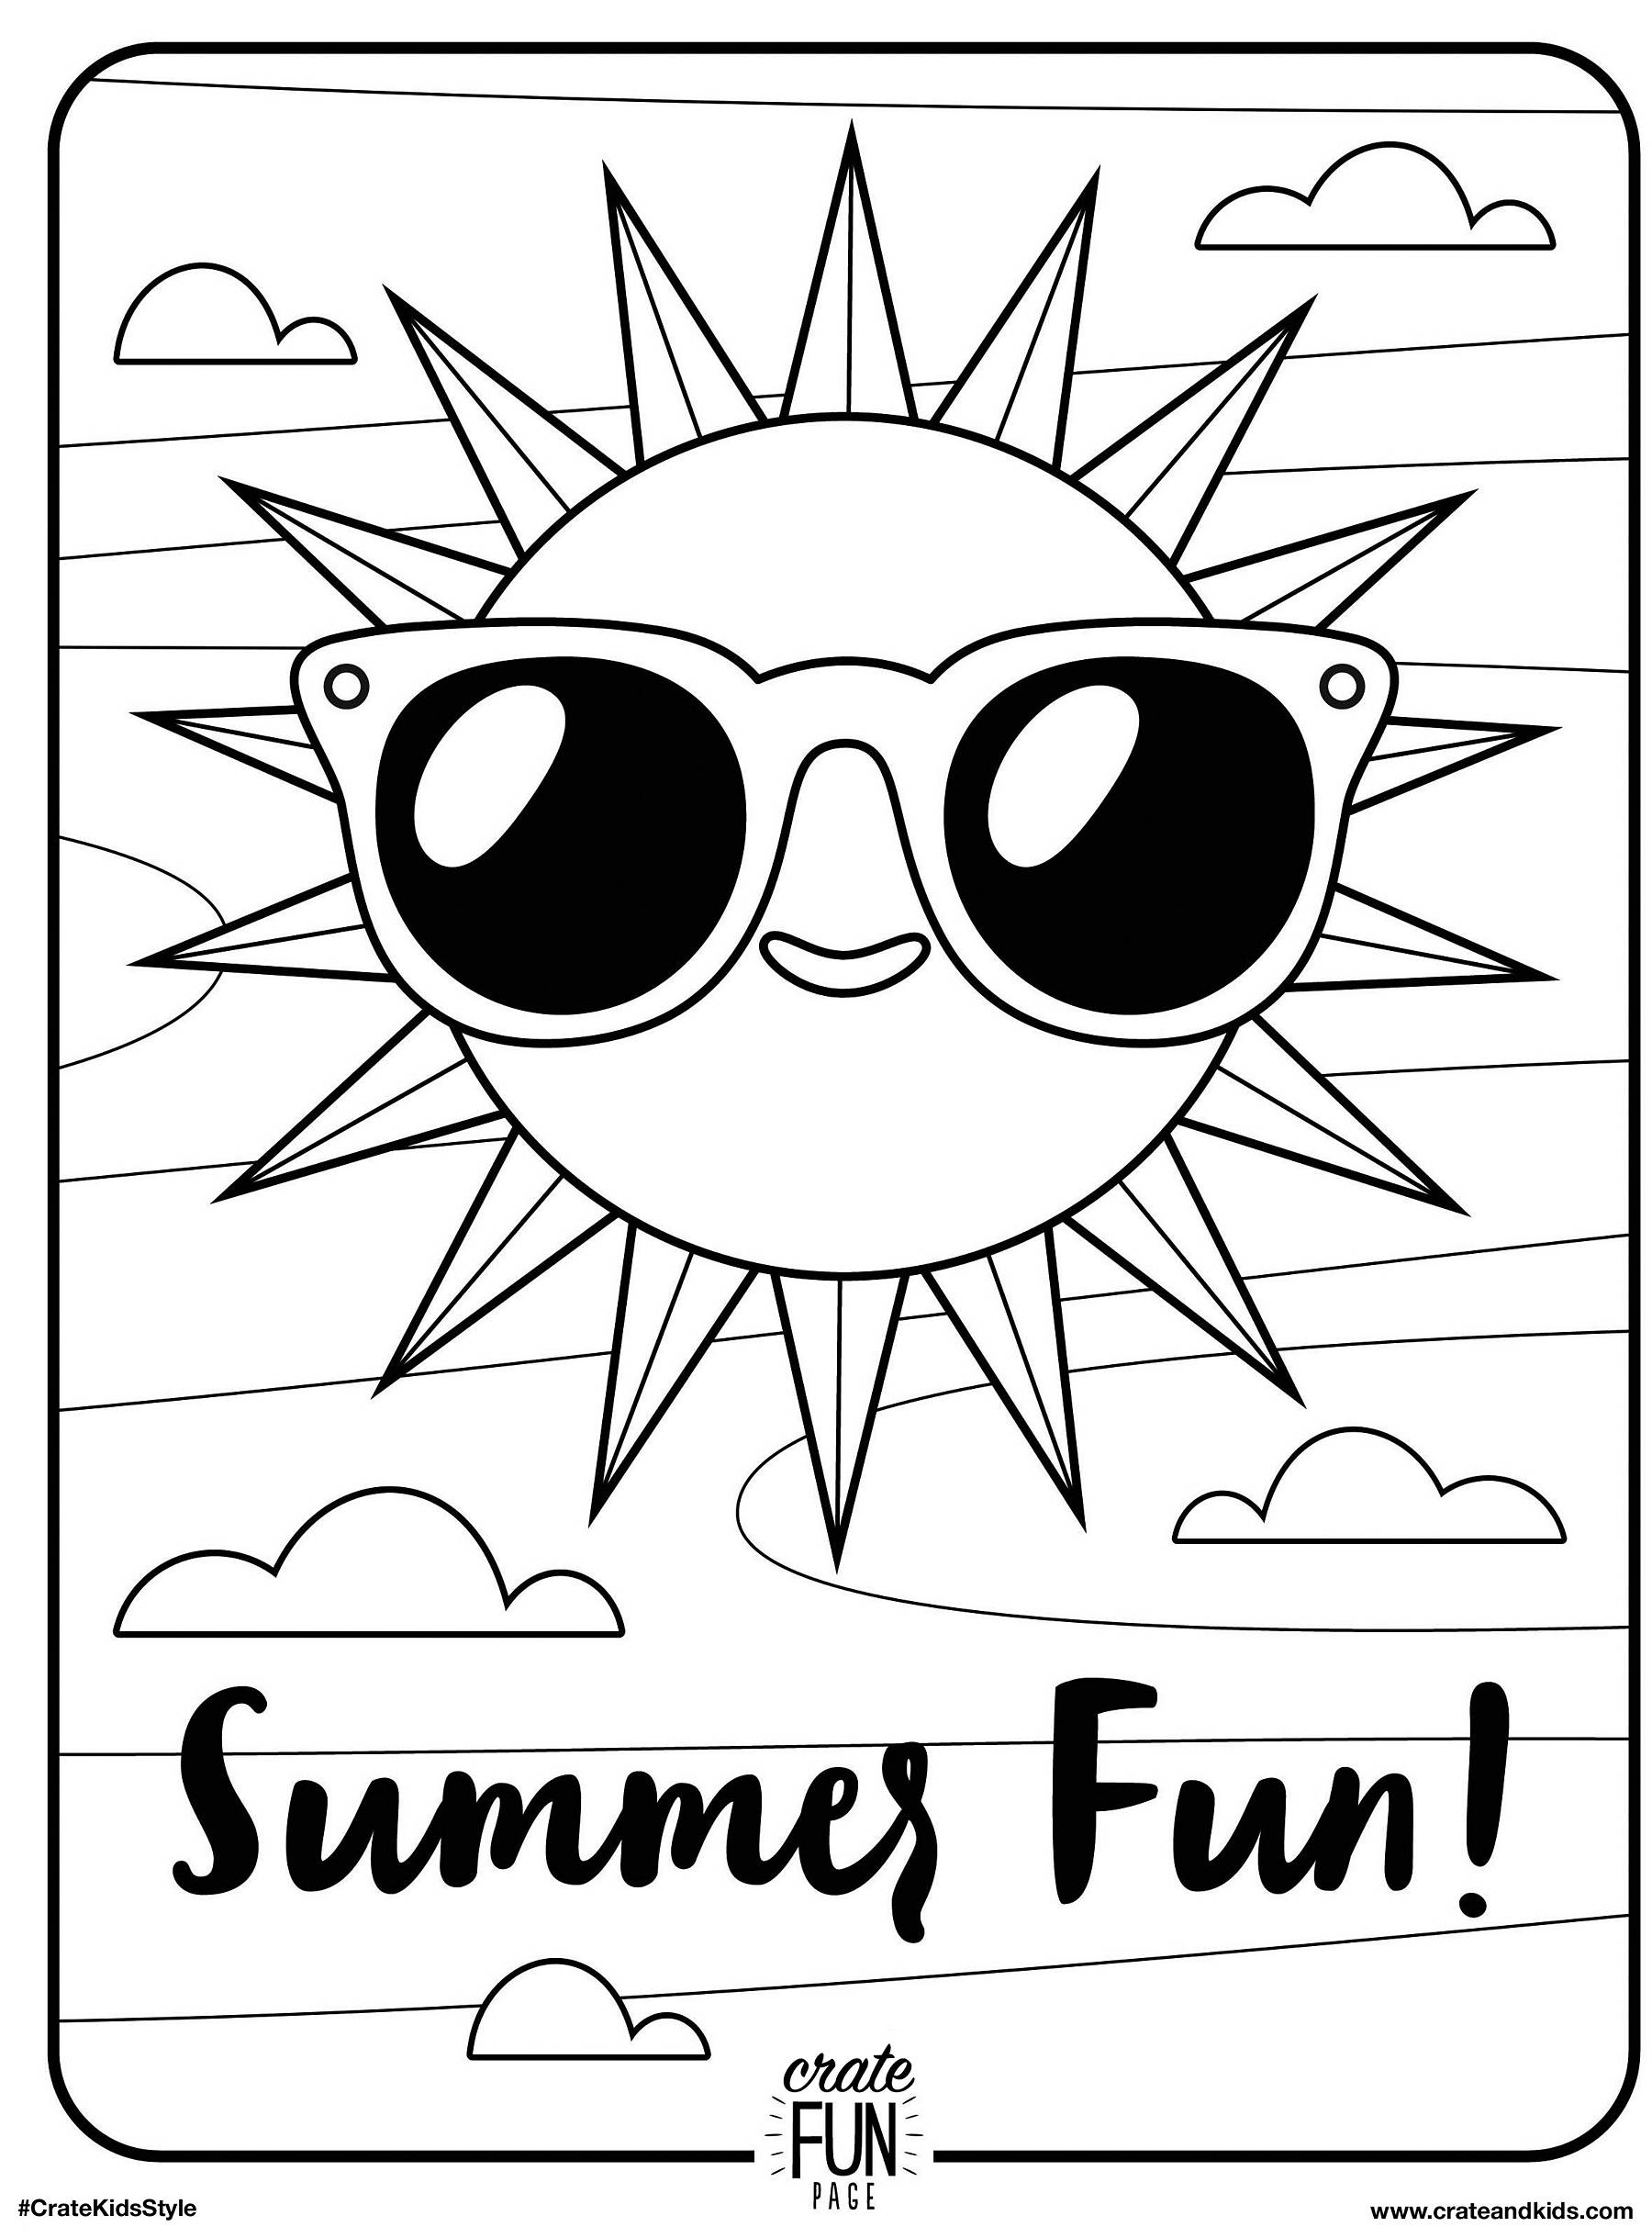 Kids summer fun free printable coloring page crate kids nada